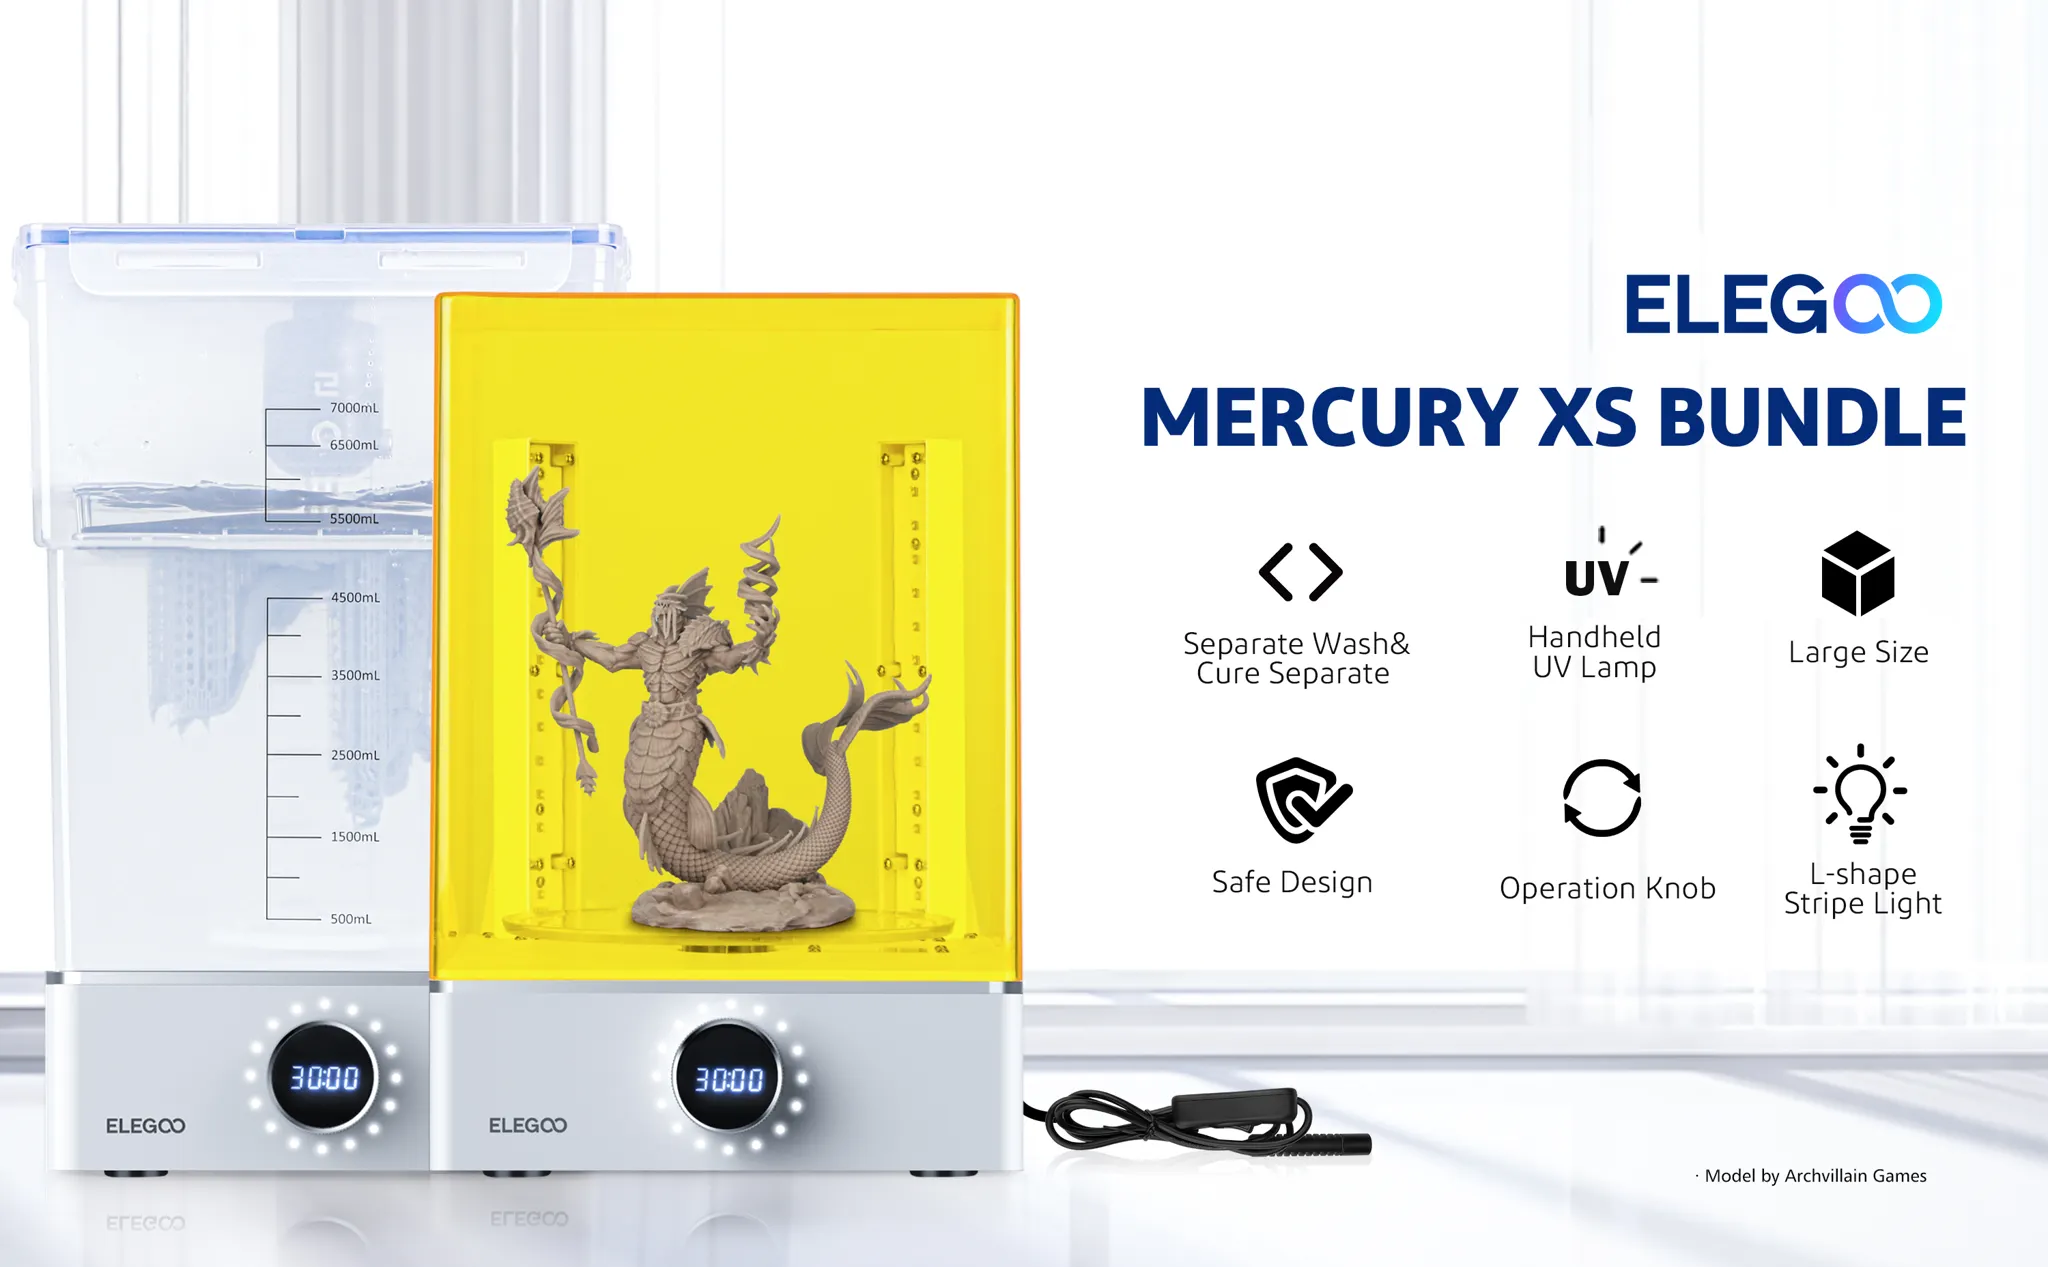 ELEGOO Mercury XS Bundle Wash and Cure Machine Image 1